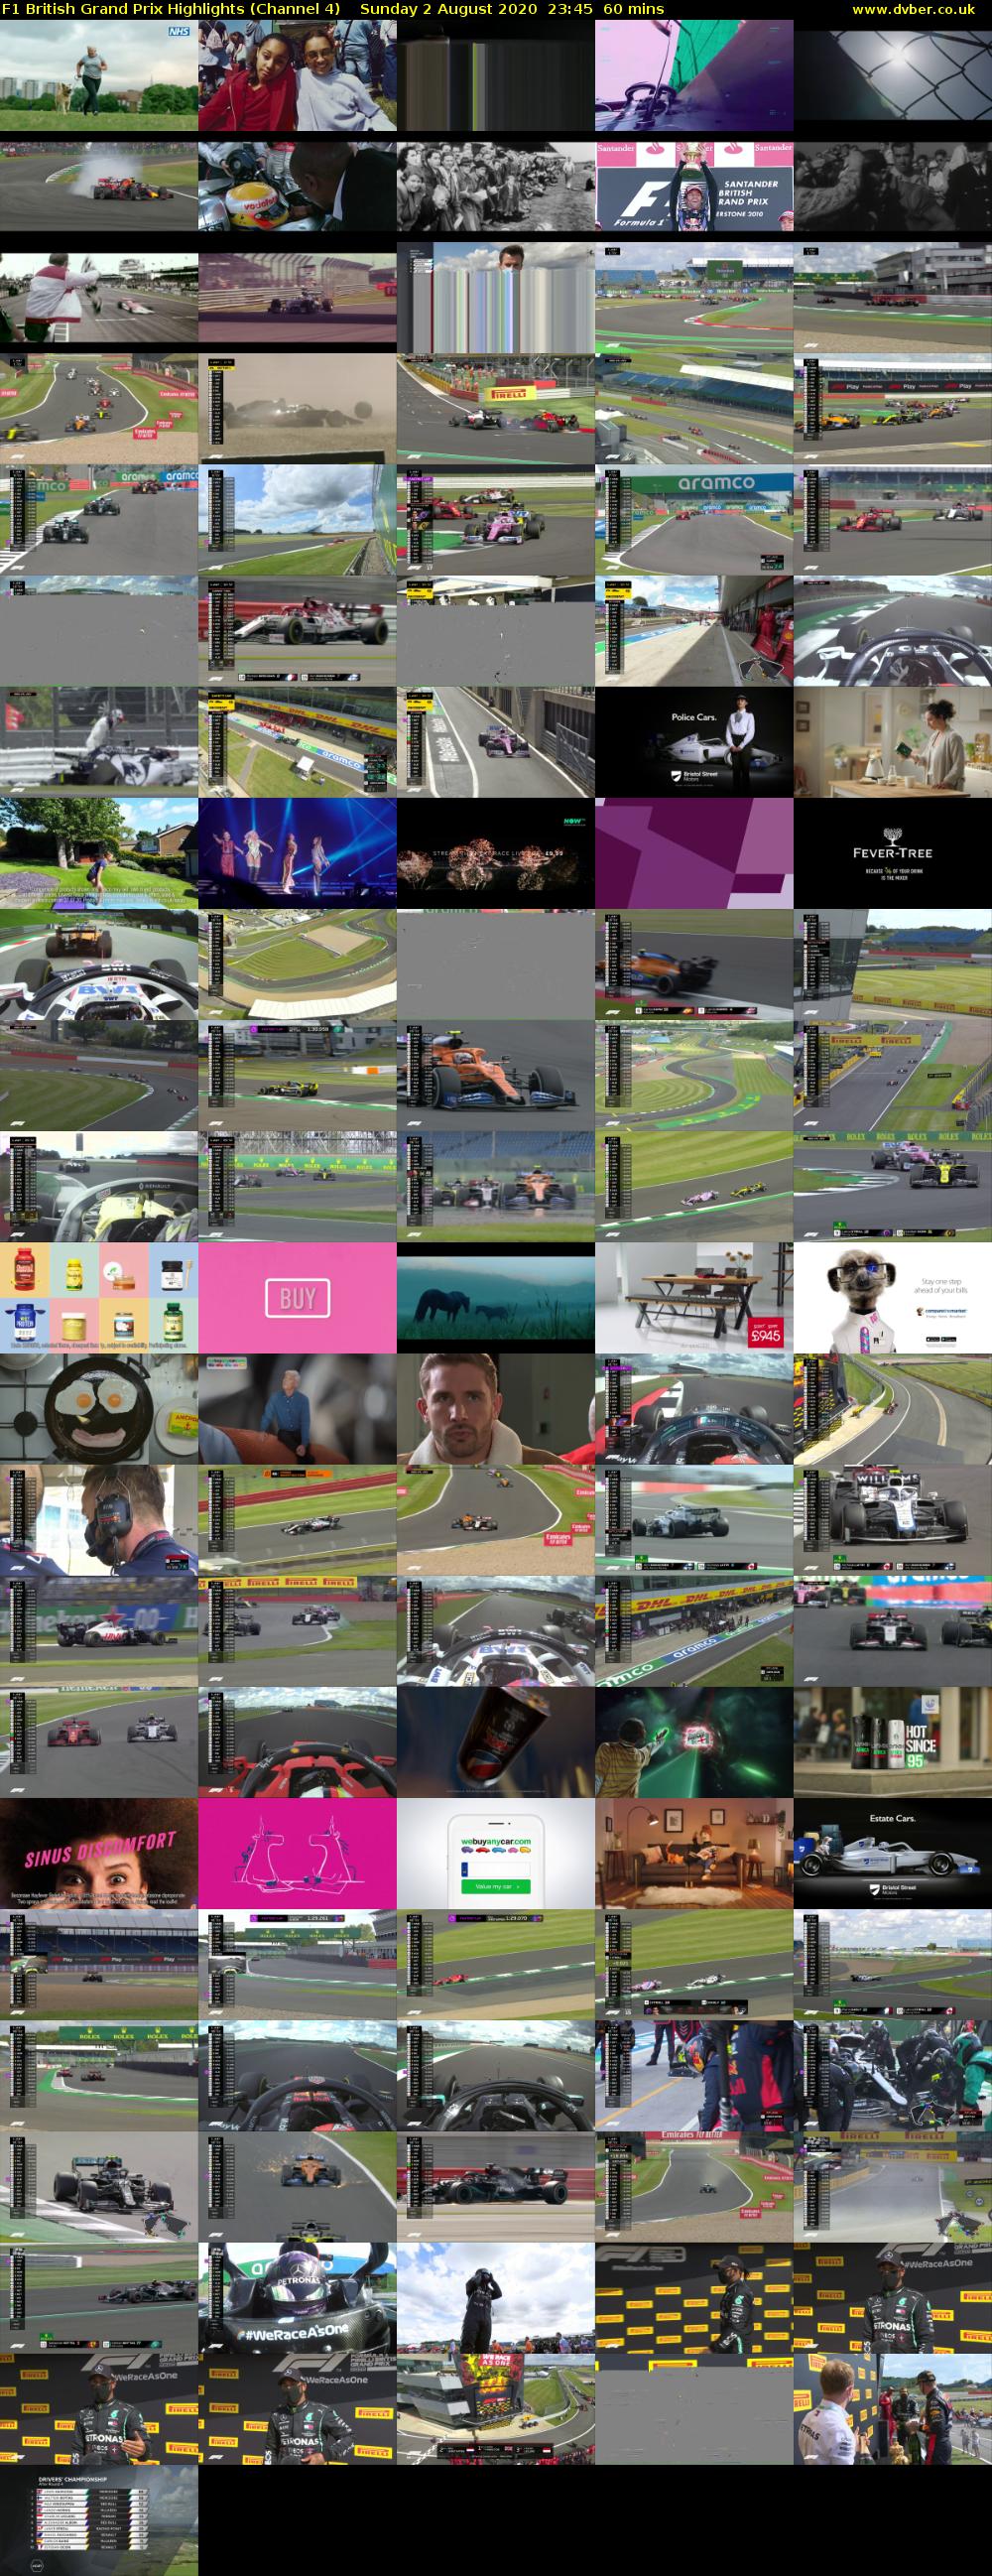 F1 British Grand Prix Highlights (Channel 4) Sunday 2 August 2020 23:45 - 00:45